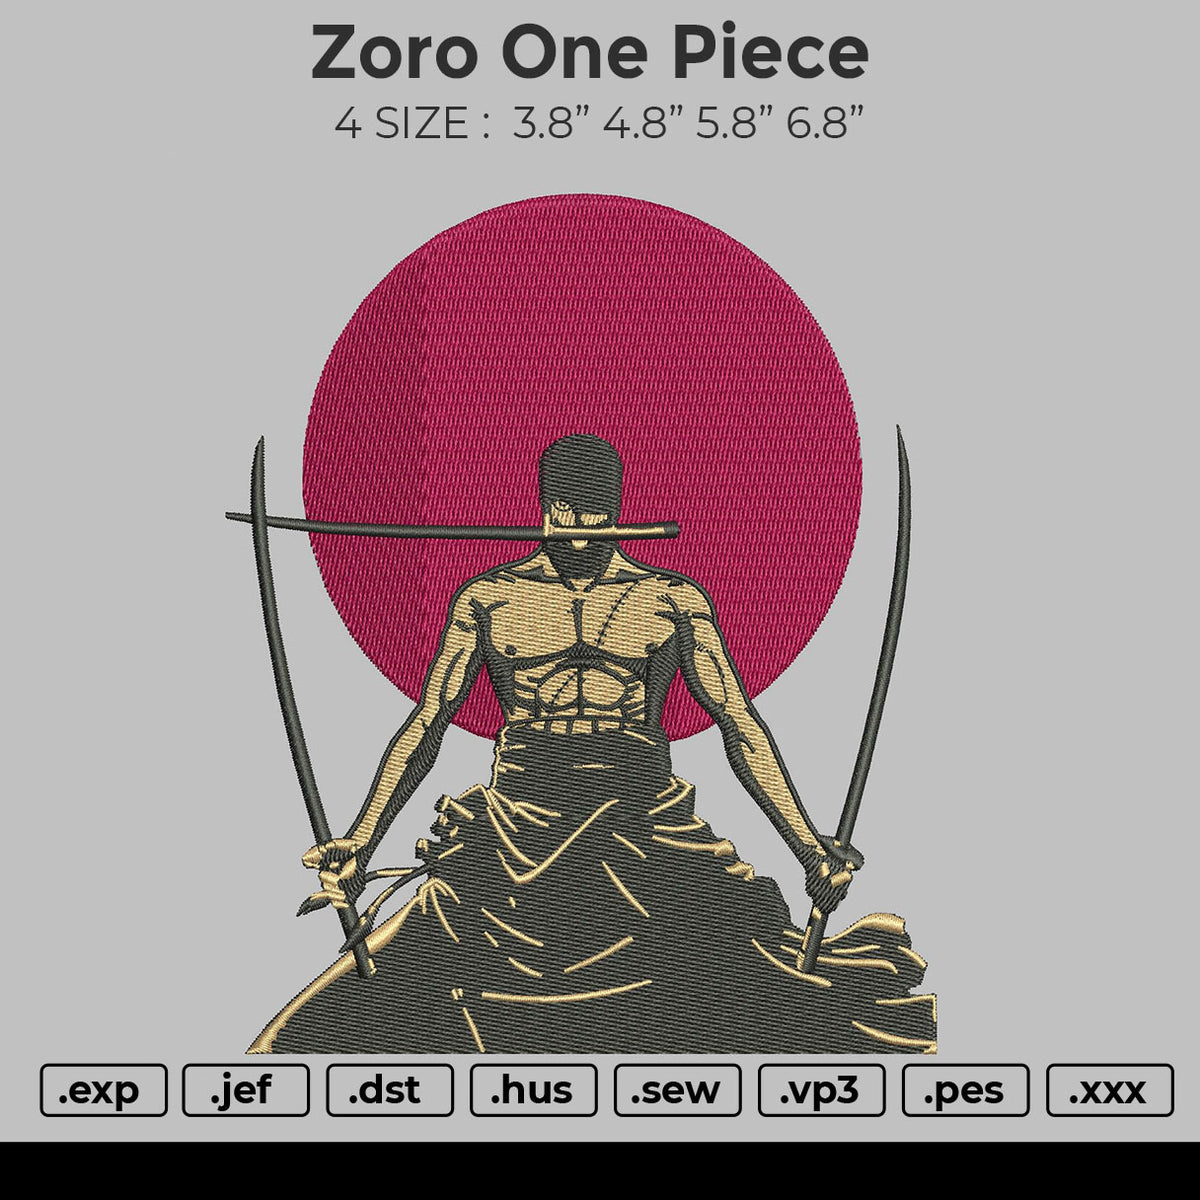 One Piece Zoro Embroidery Design File, One Piece Anime Embro